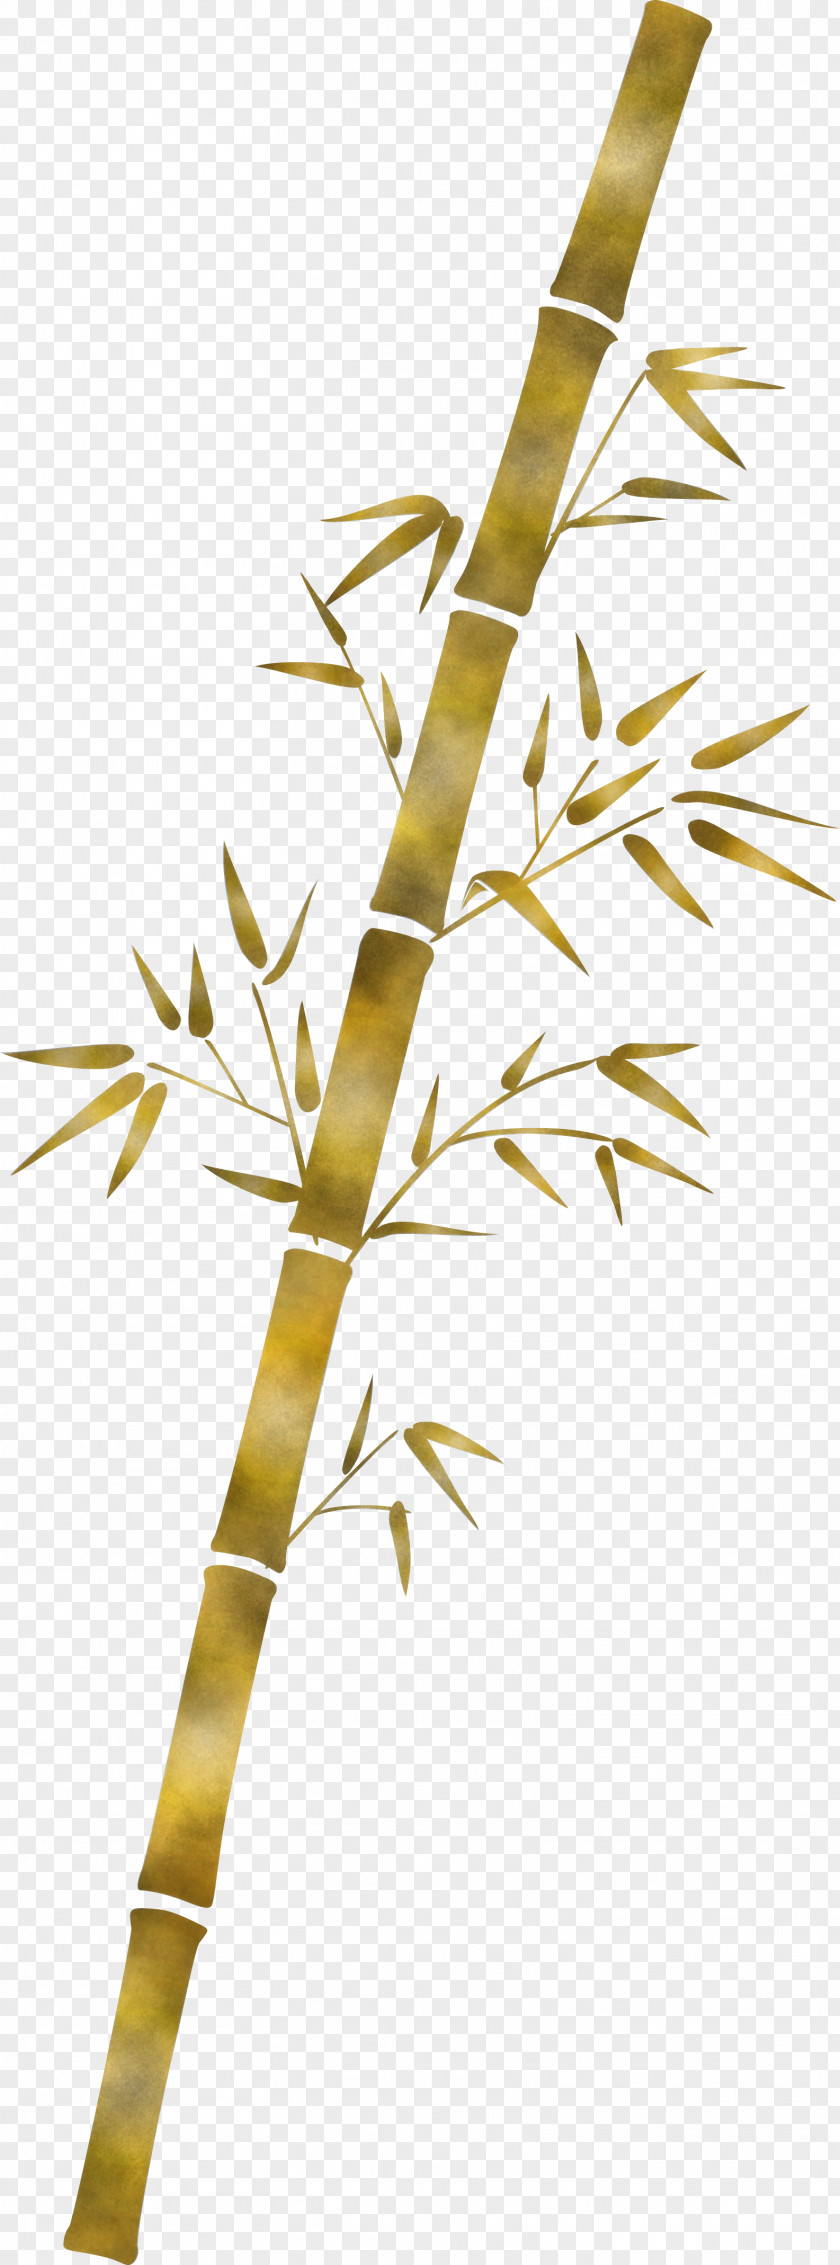 Bamboo Leaf PNG